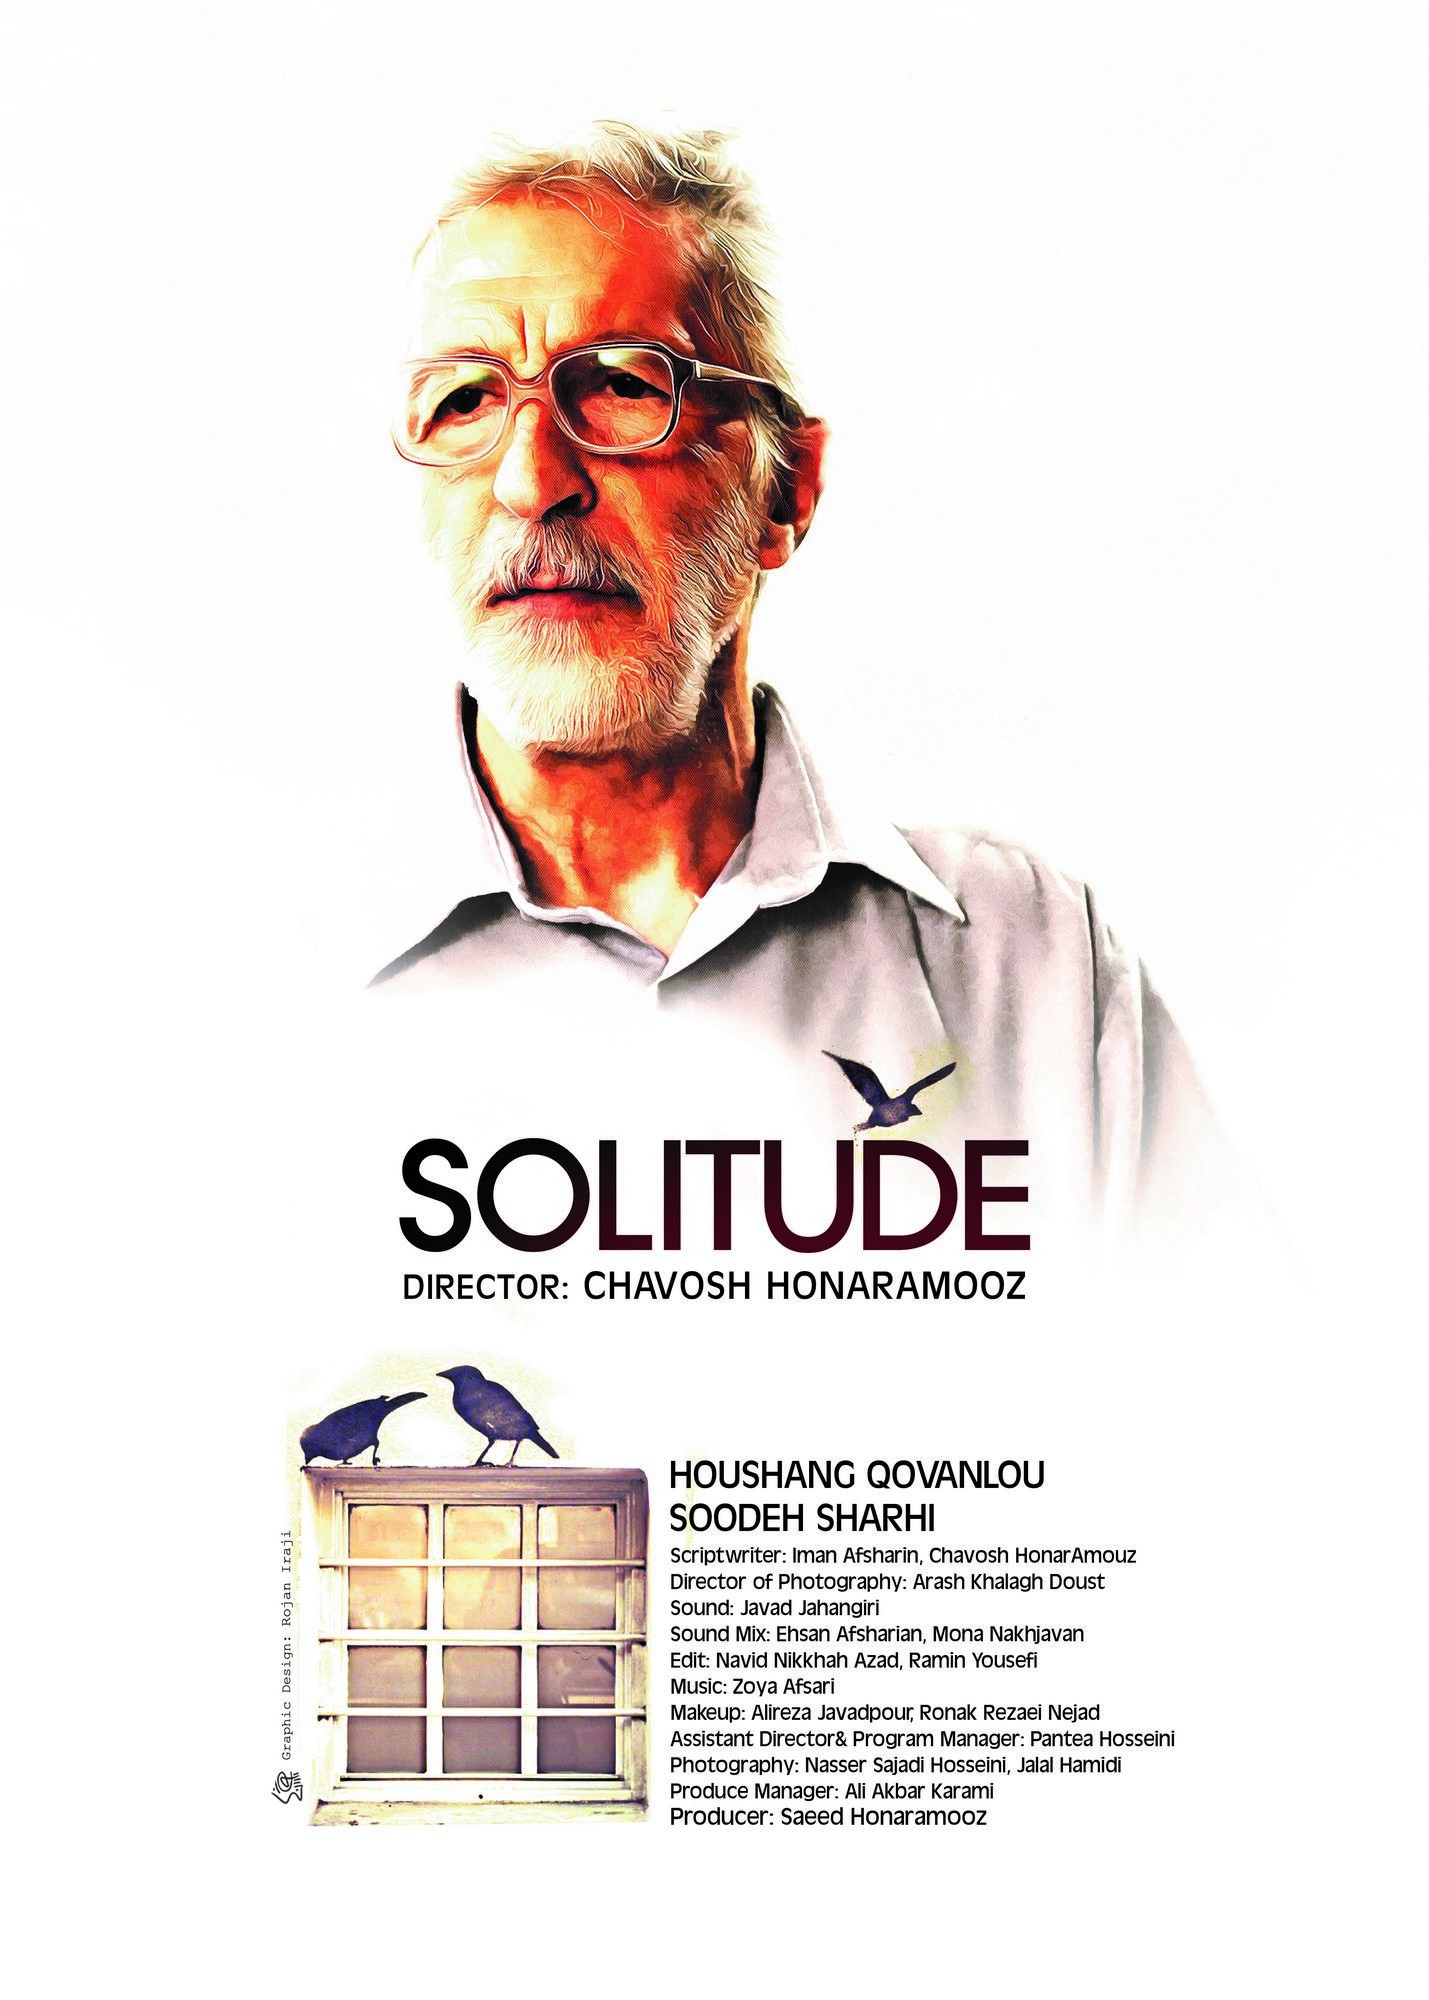 Mega Sized Movie Poster Image for Solitude